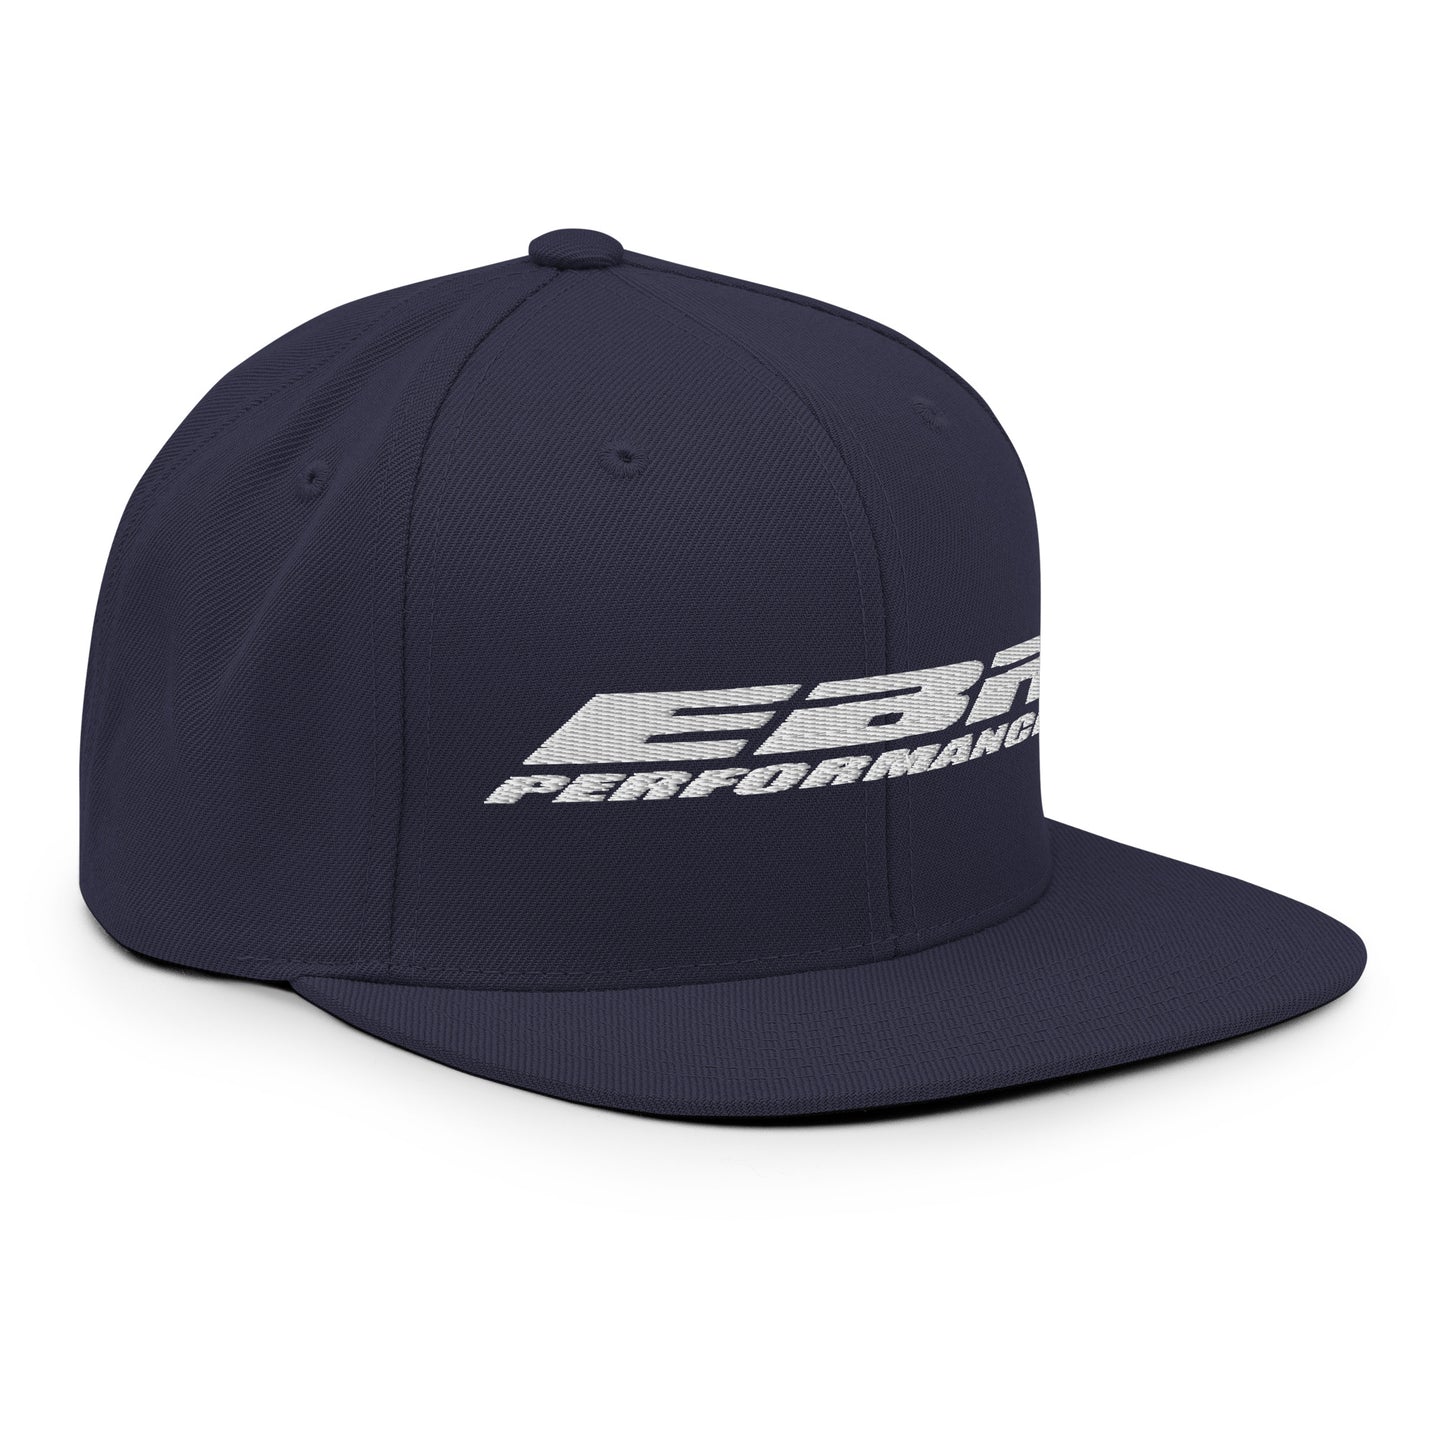 EBR Performance Snapback Hat